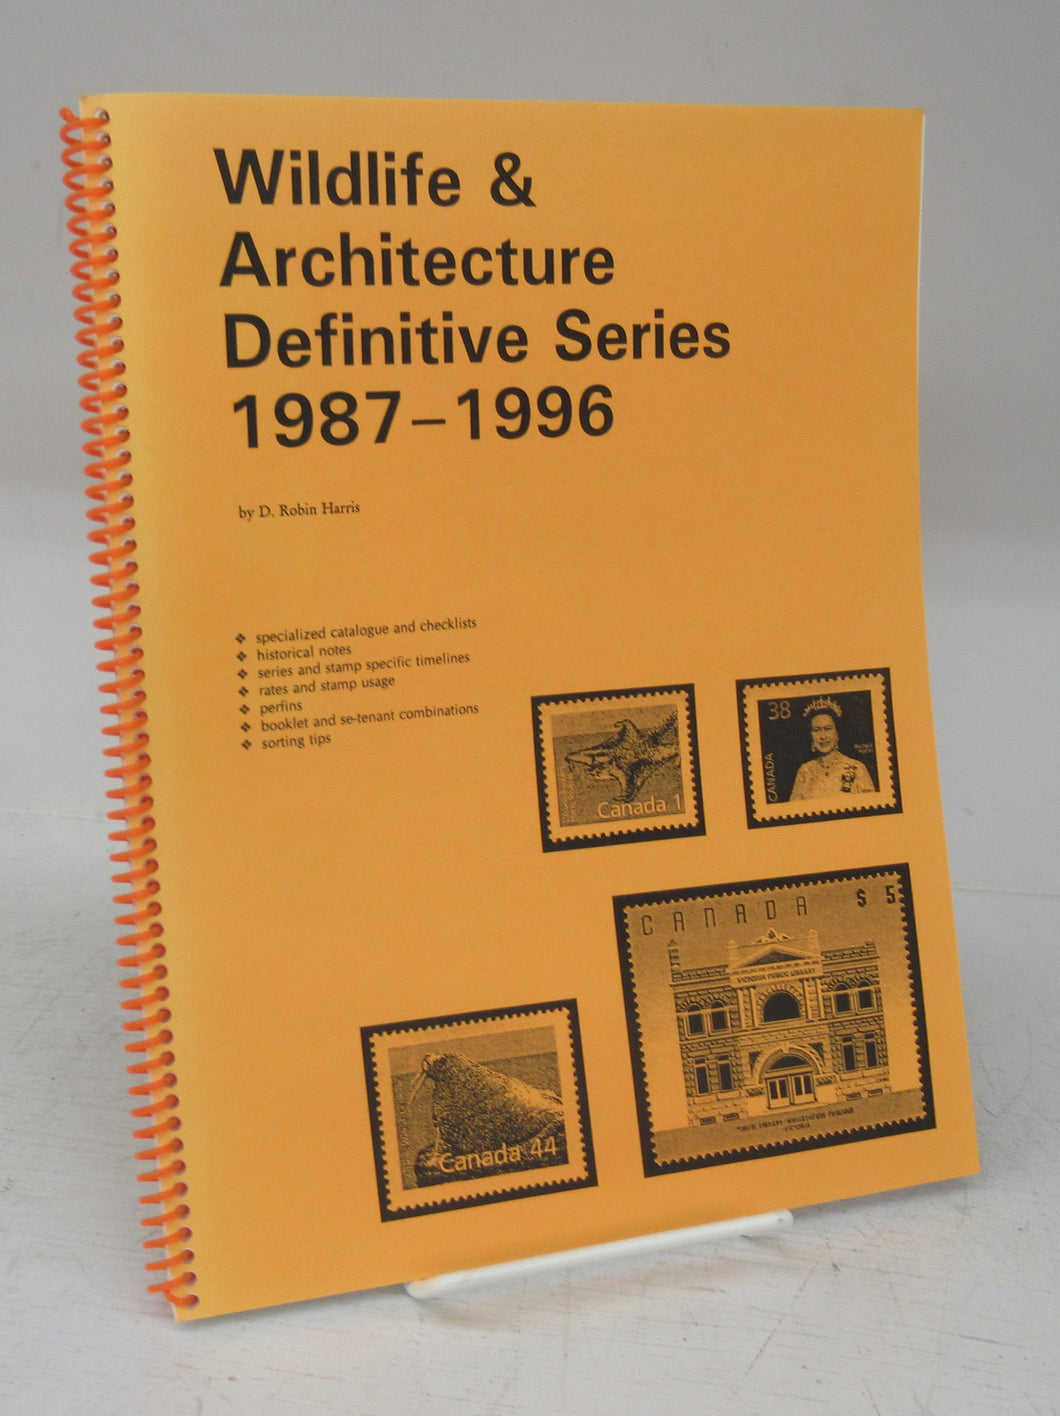 Wildlife & Architecture Definitive Series 1987-1996